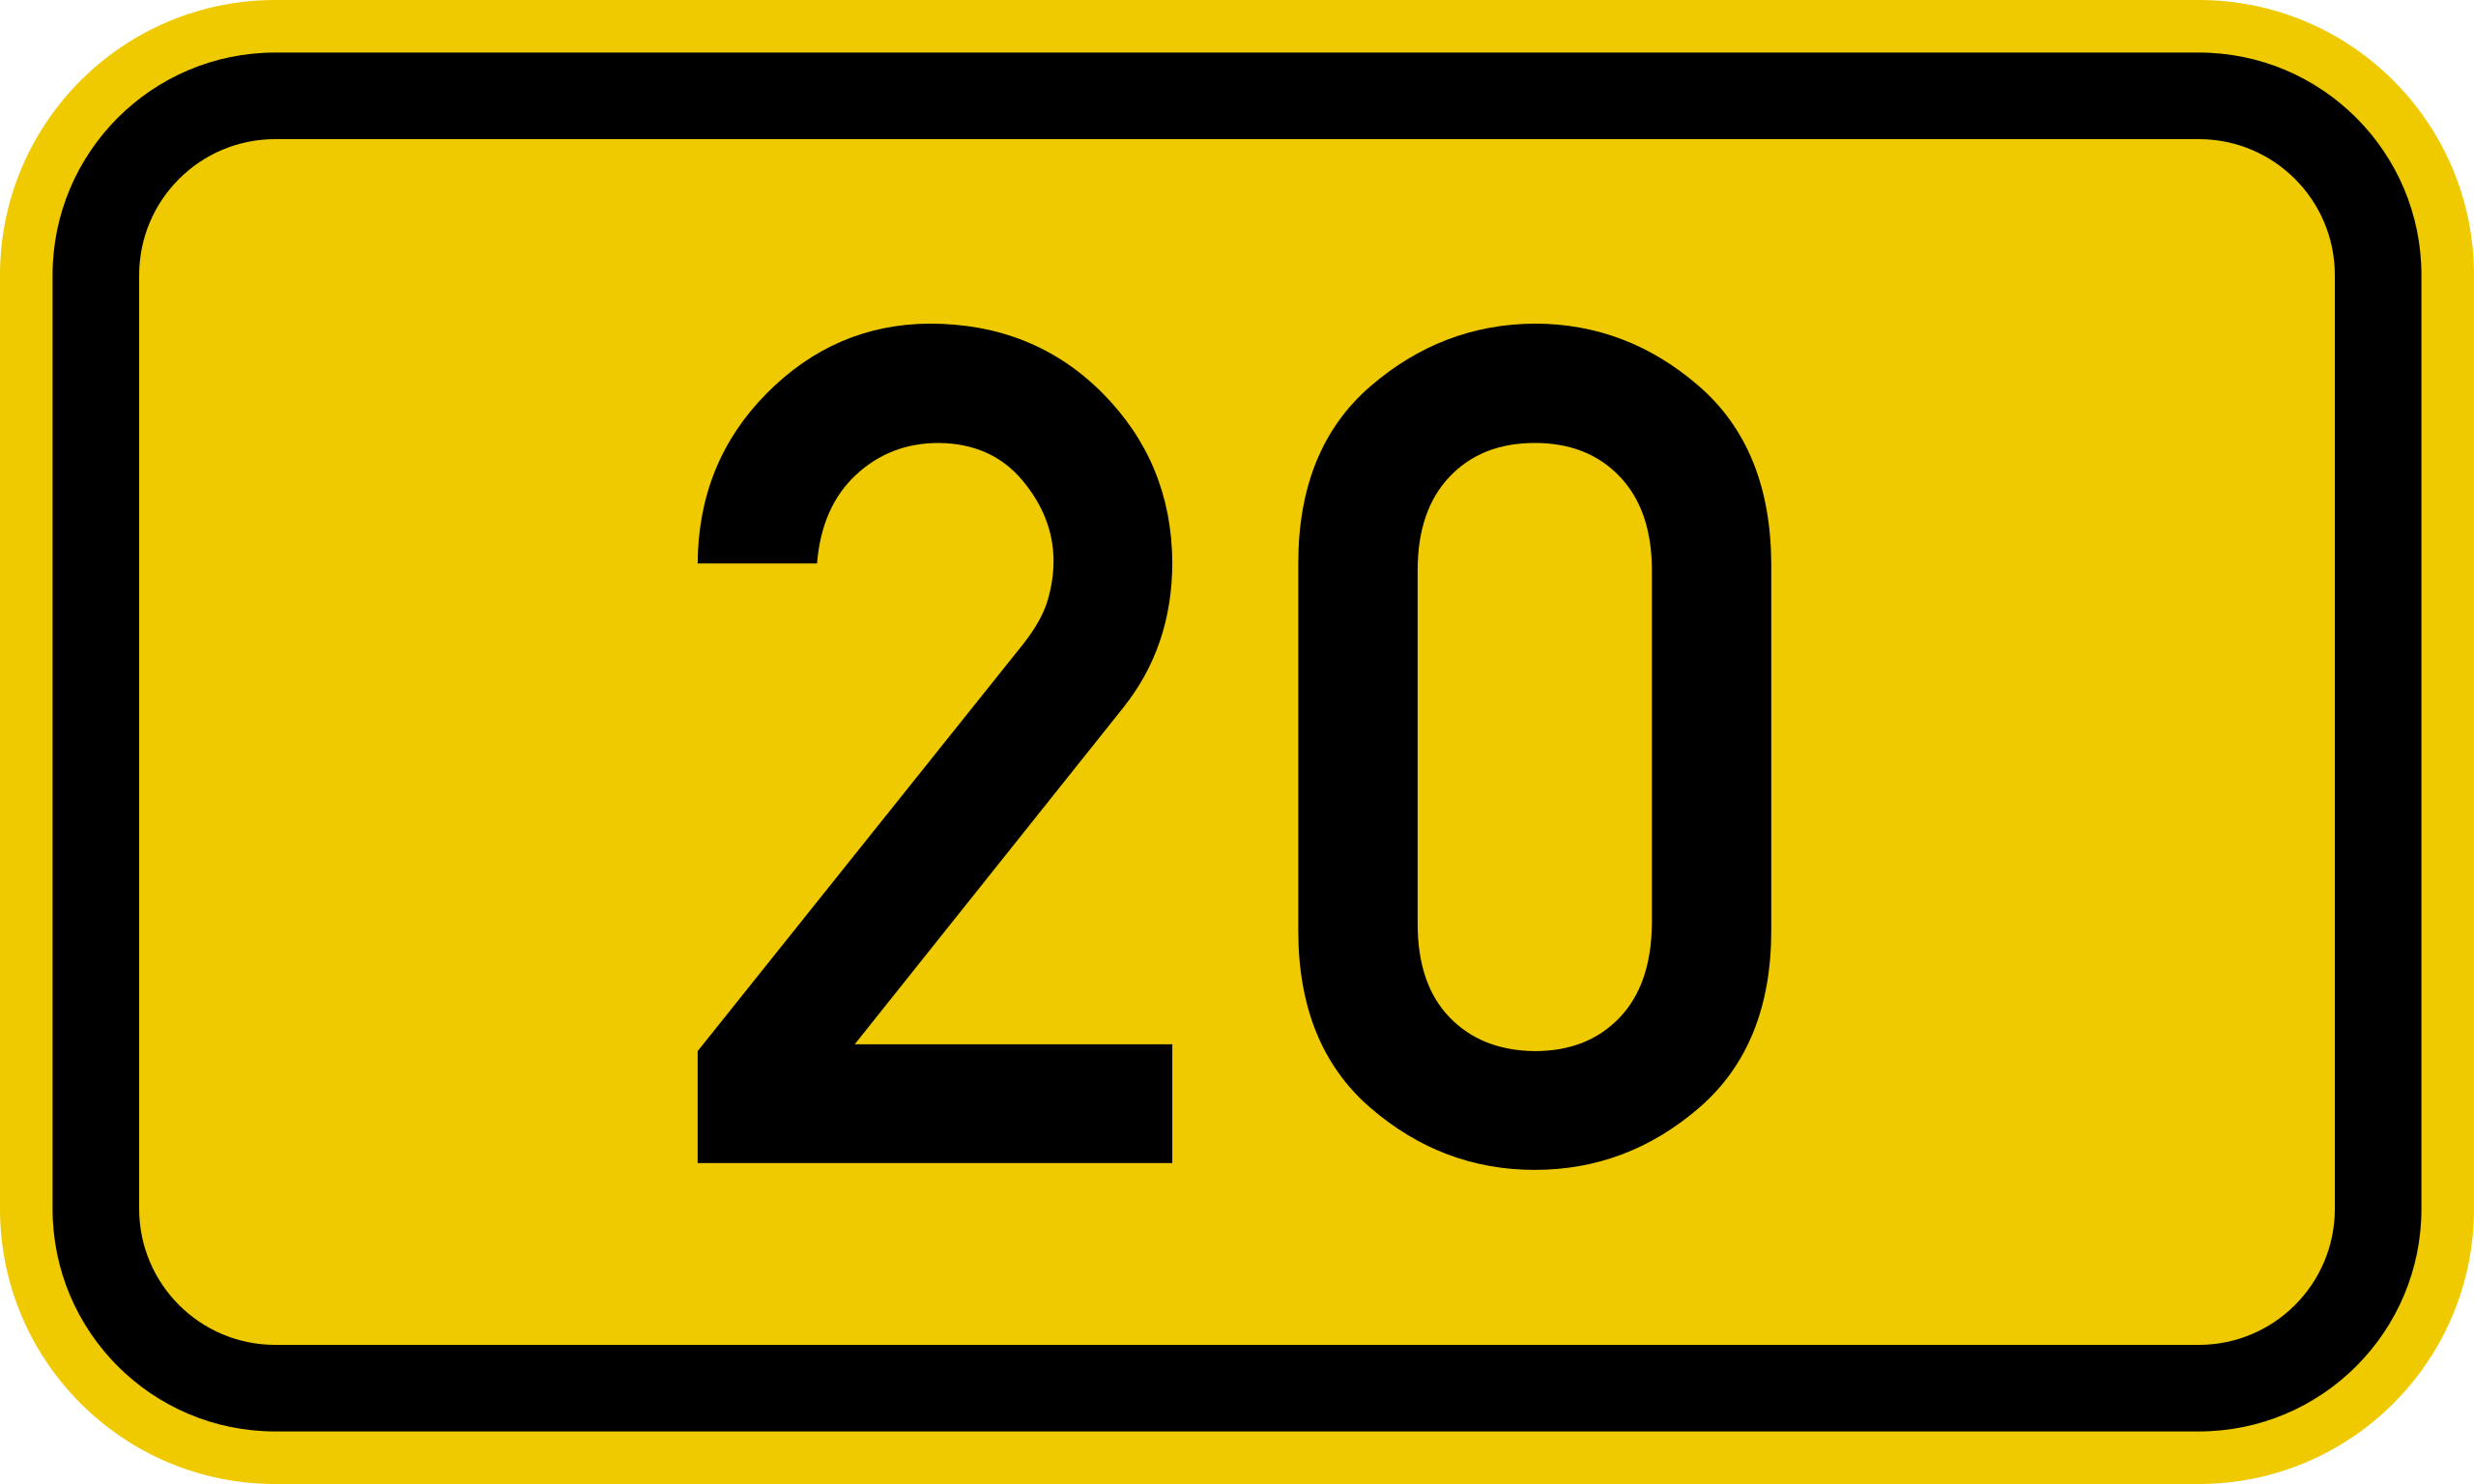 File:Bundesstraße 20 number.svg - Wikimedia Commons